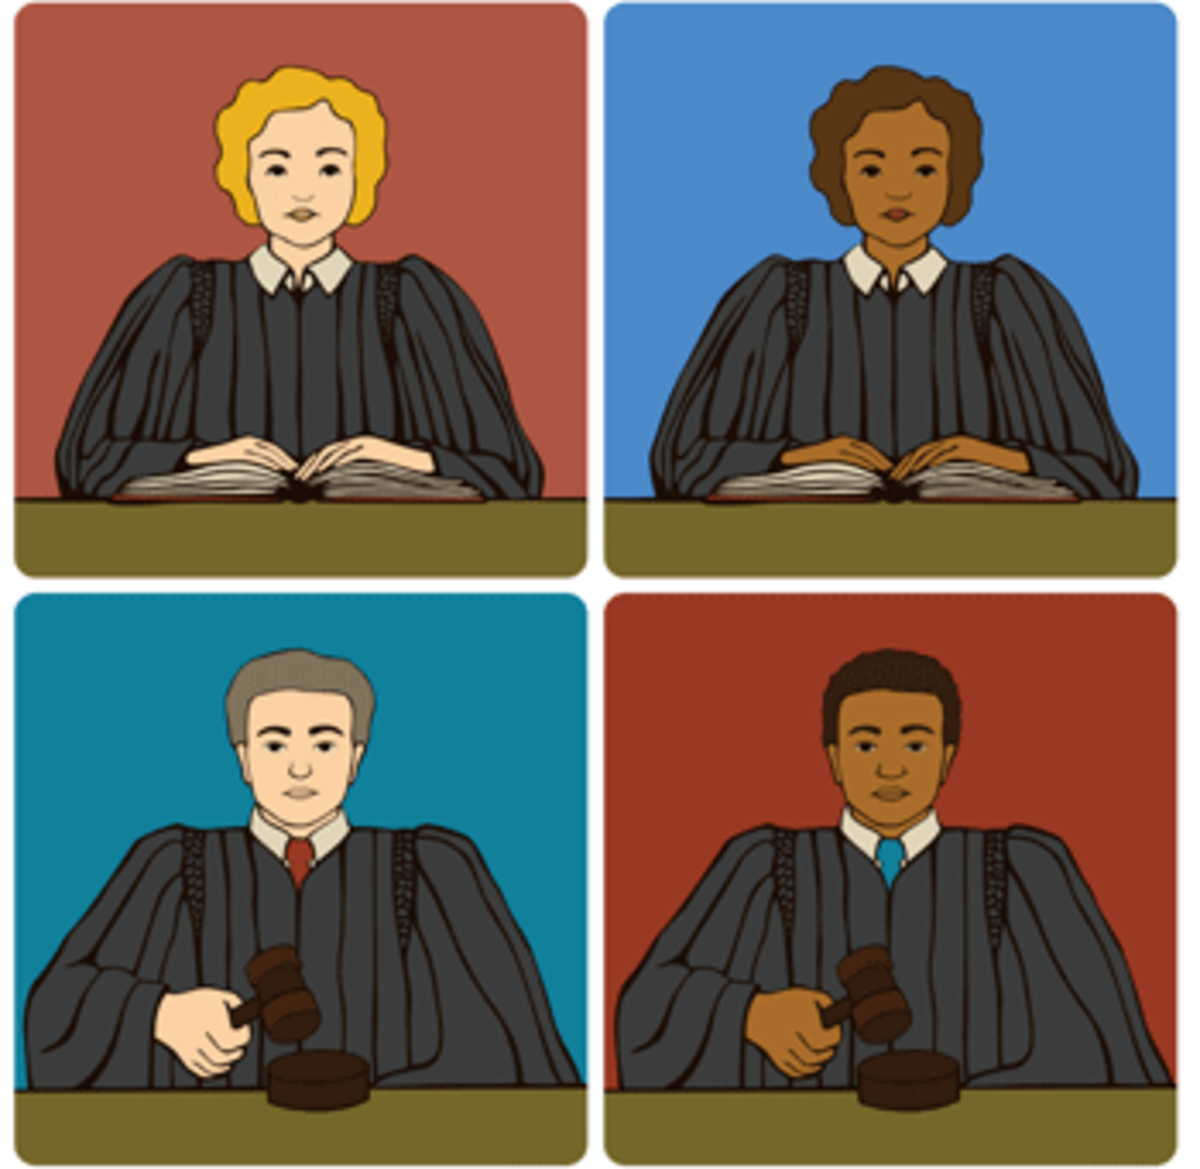 judging the judges